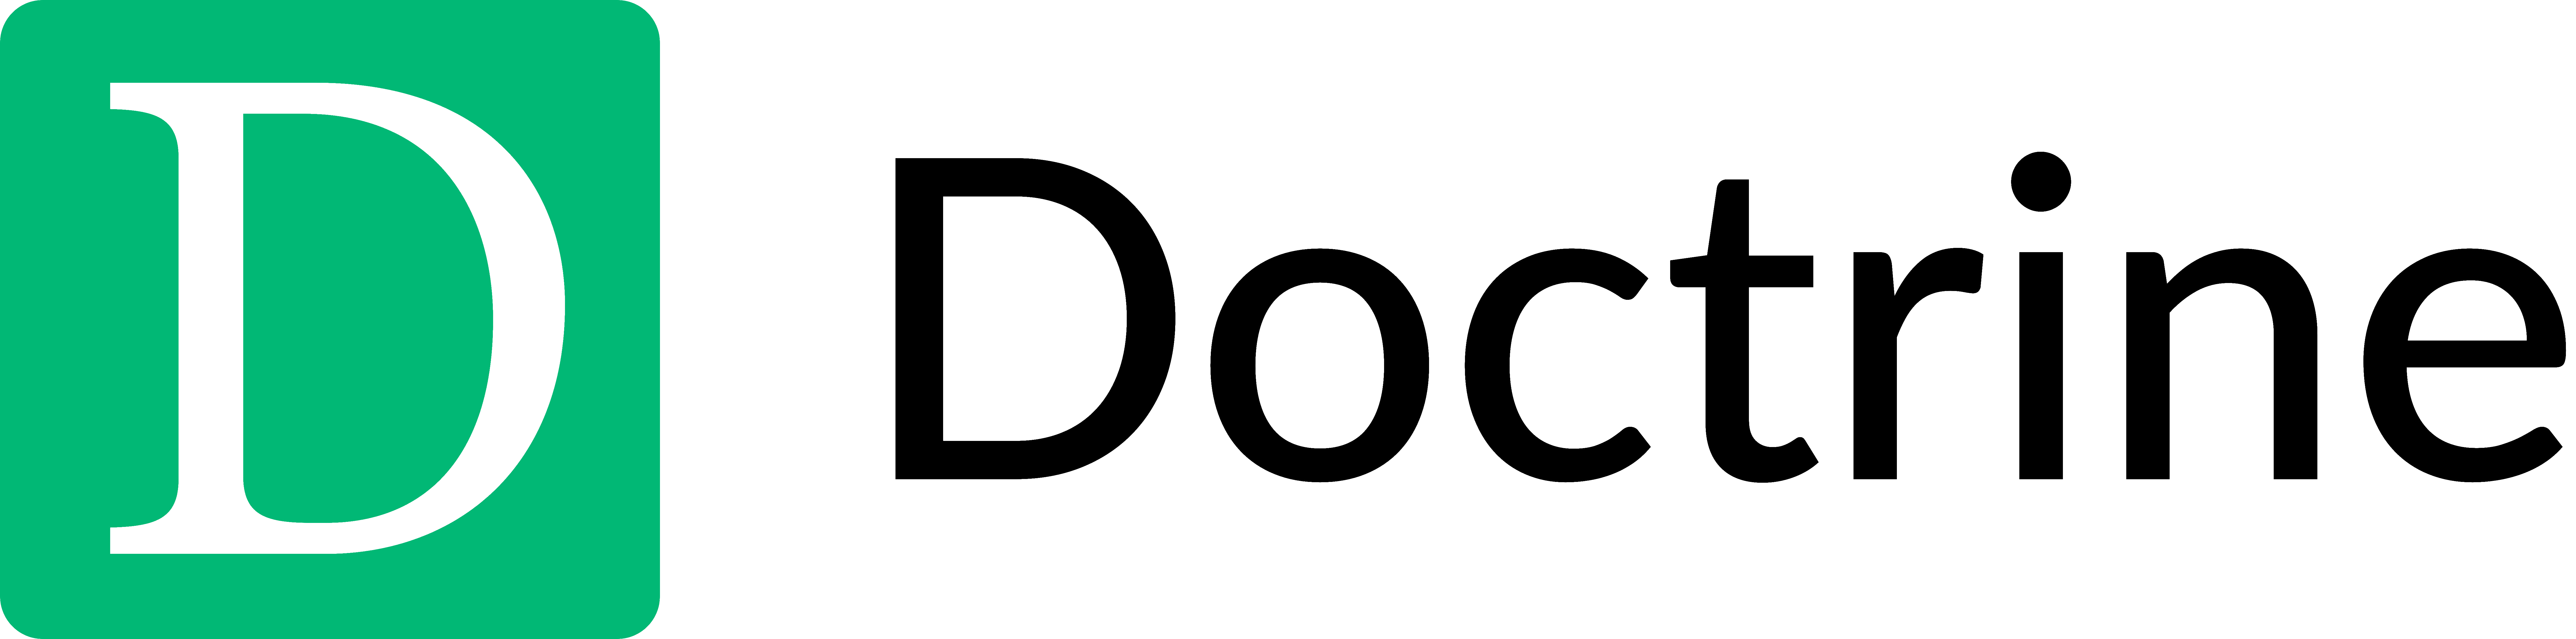 Logo Doctrine